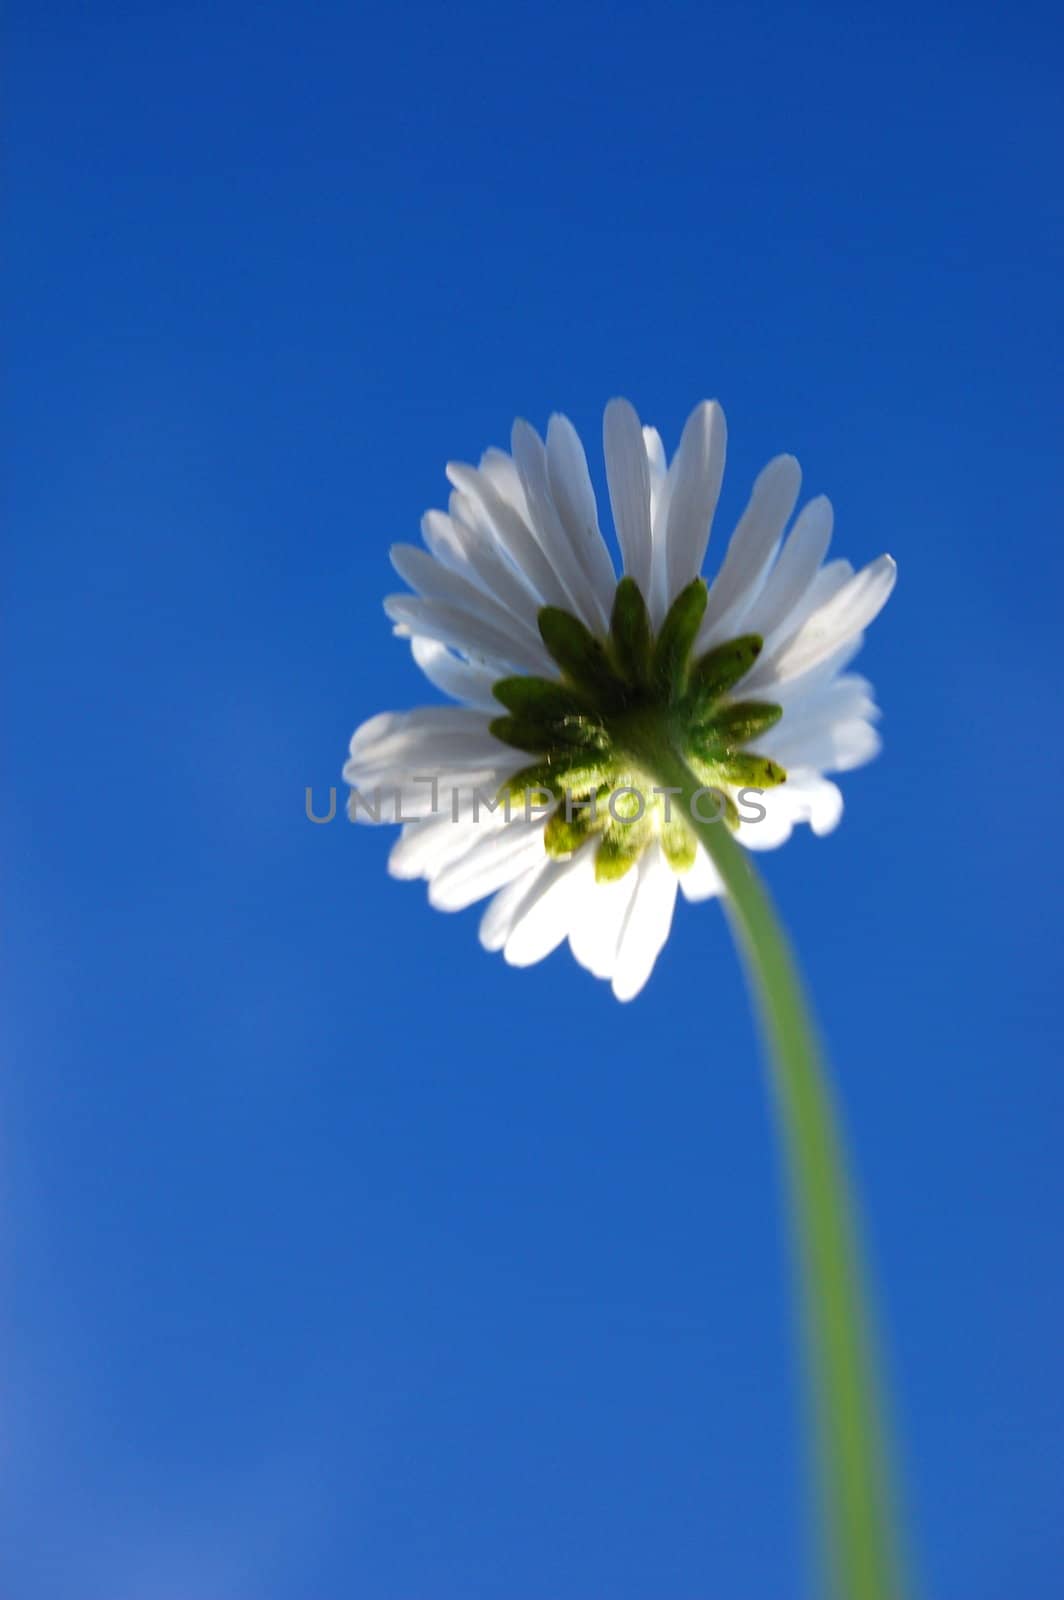 daisy under blue sky by gunnar3000